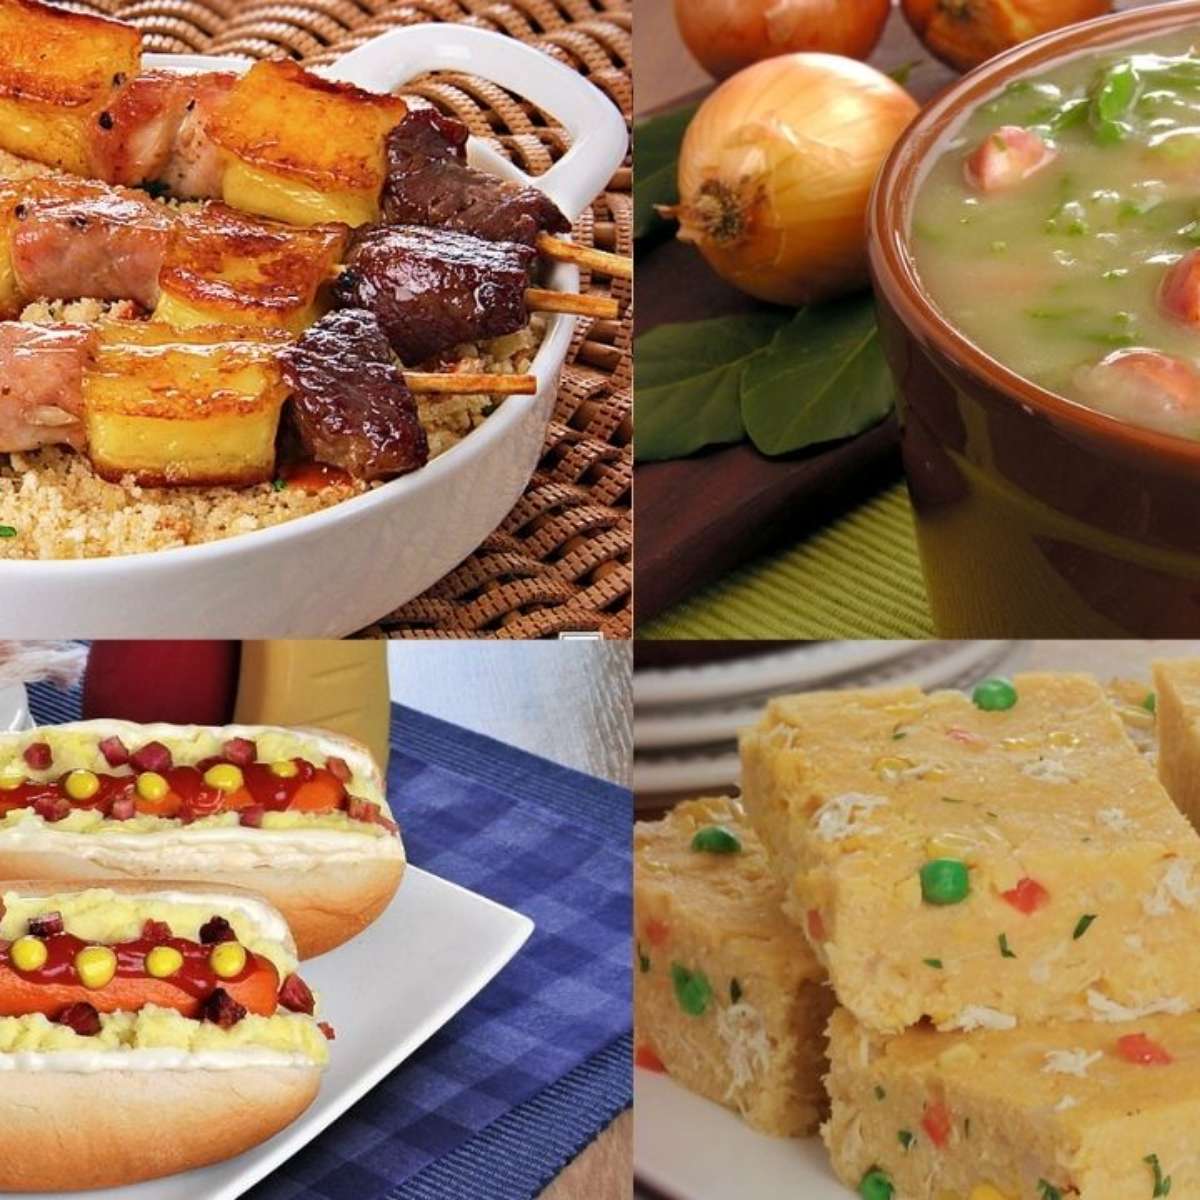 Comidas de Festa Junina - Receitas típicas juninas